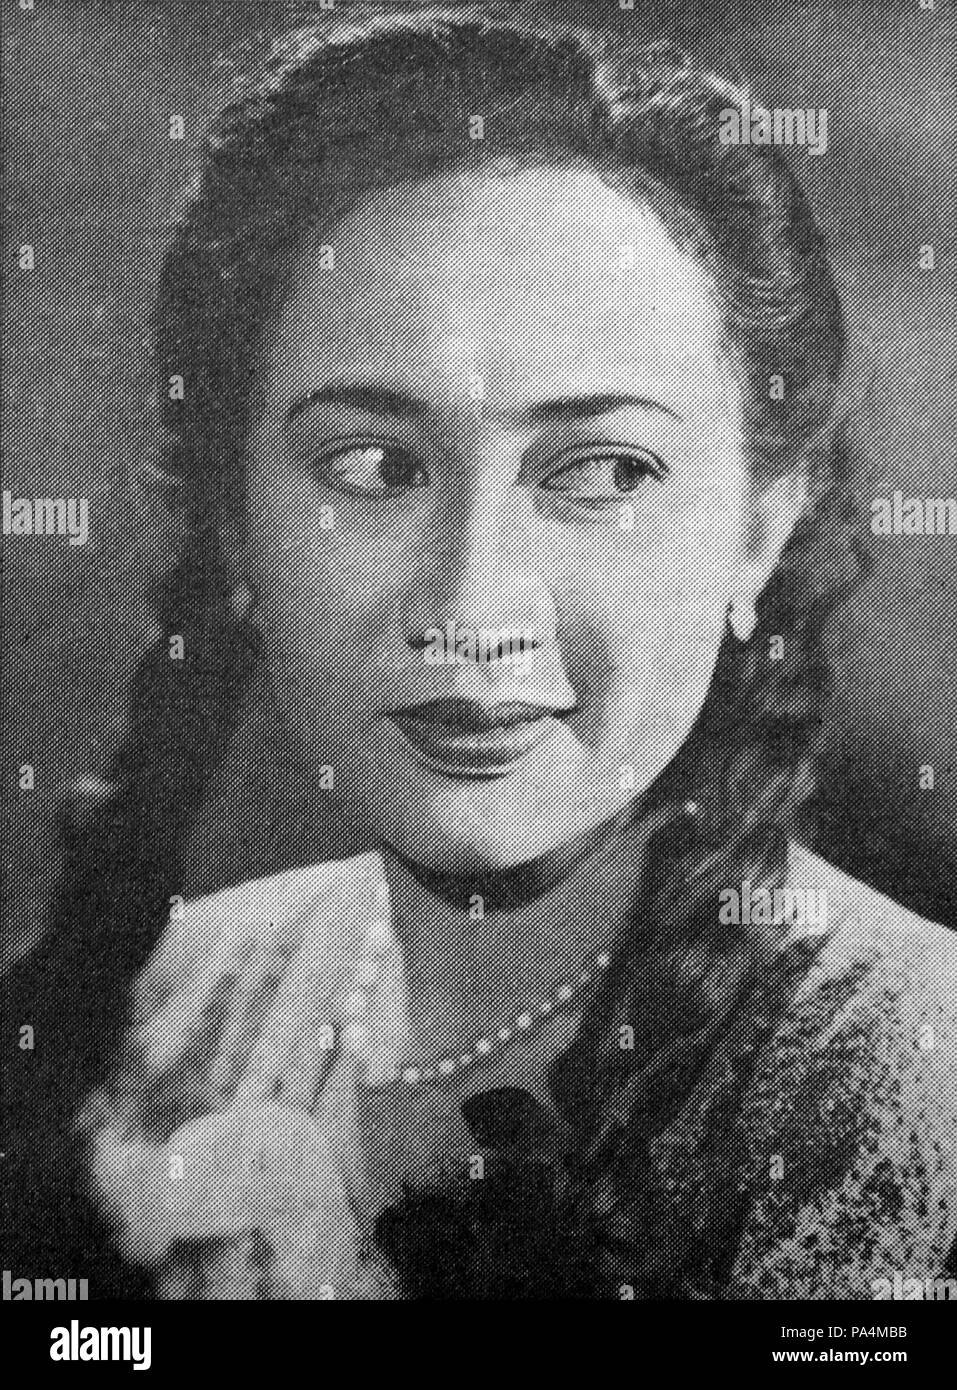 210 R Umami, Film Varia 1.8 (July 1954), p6 Stock Photo